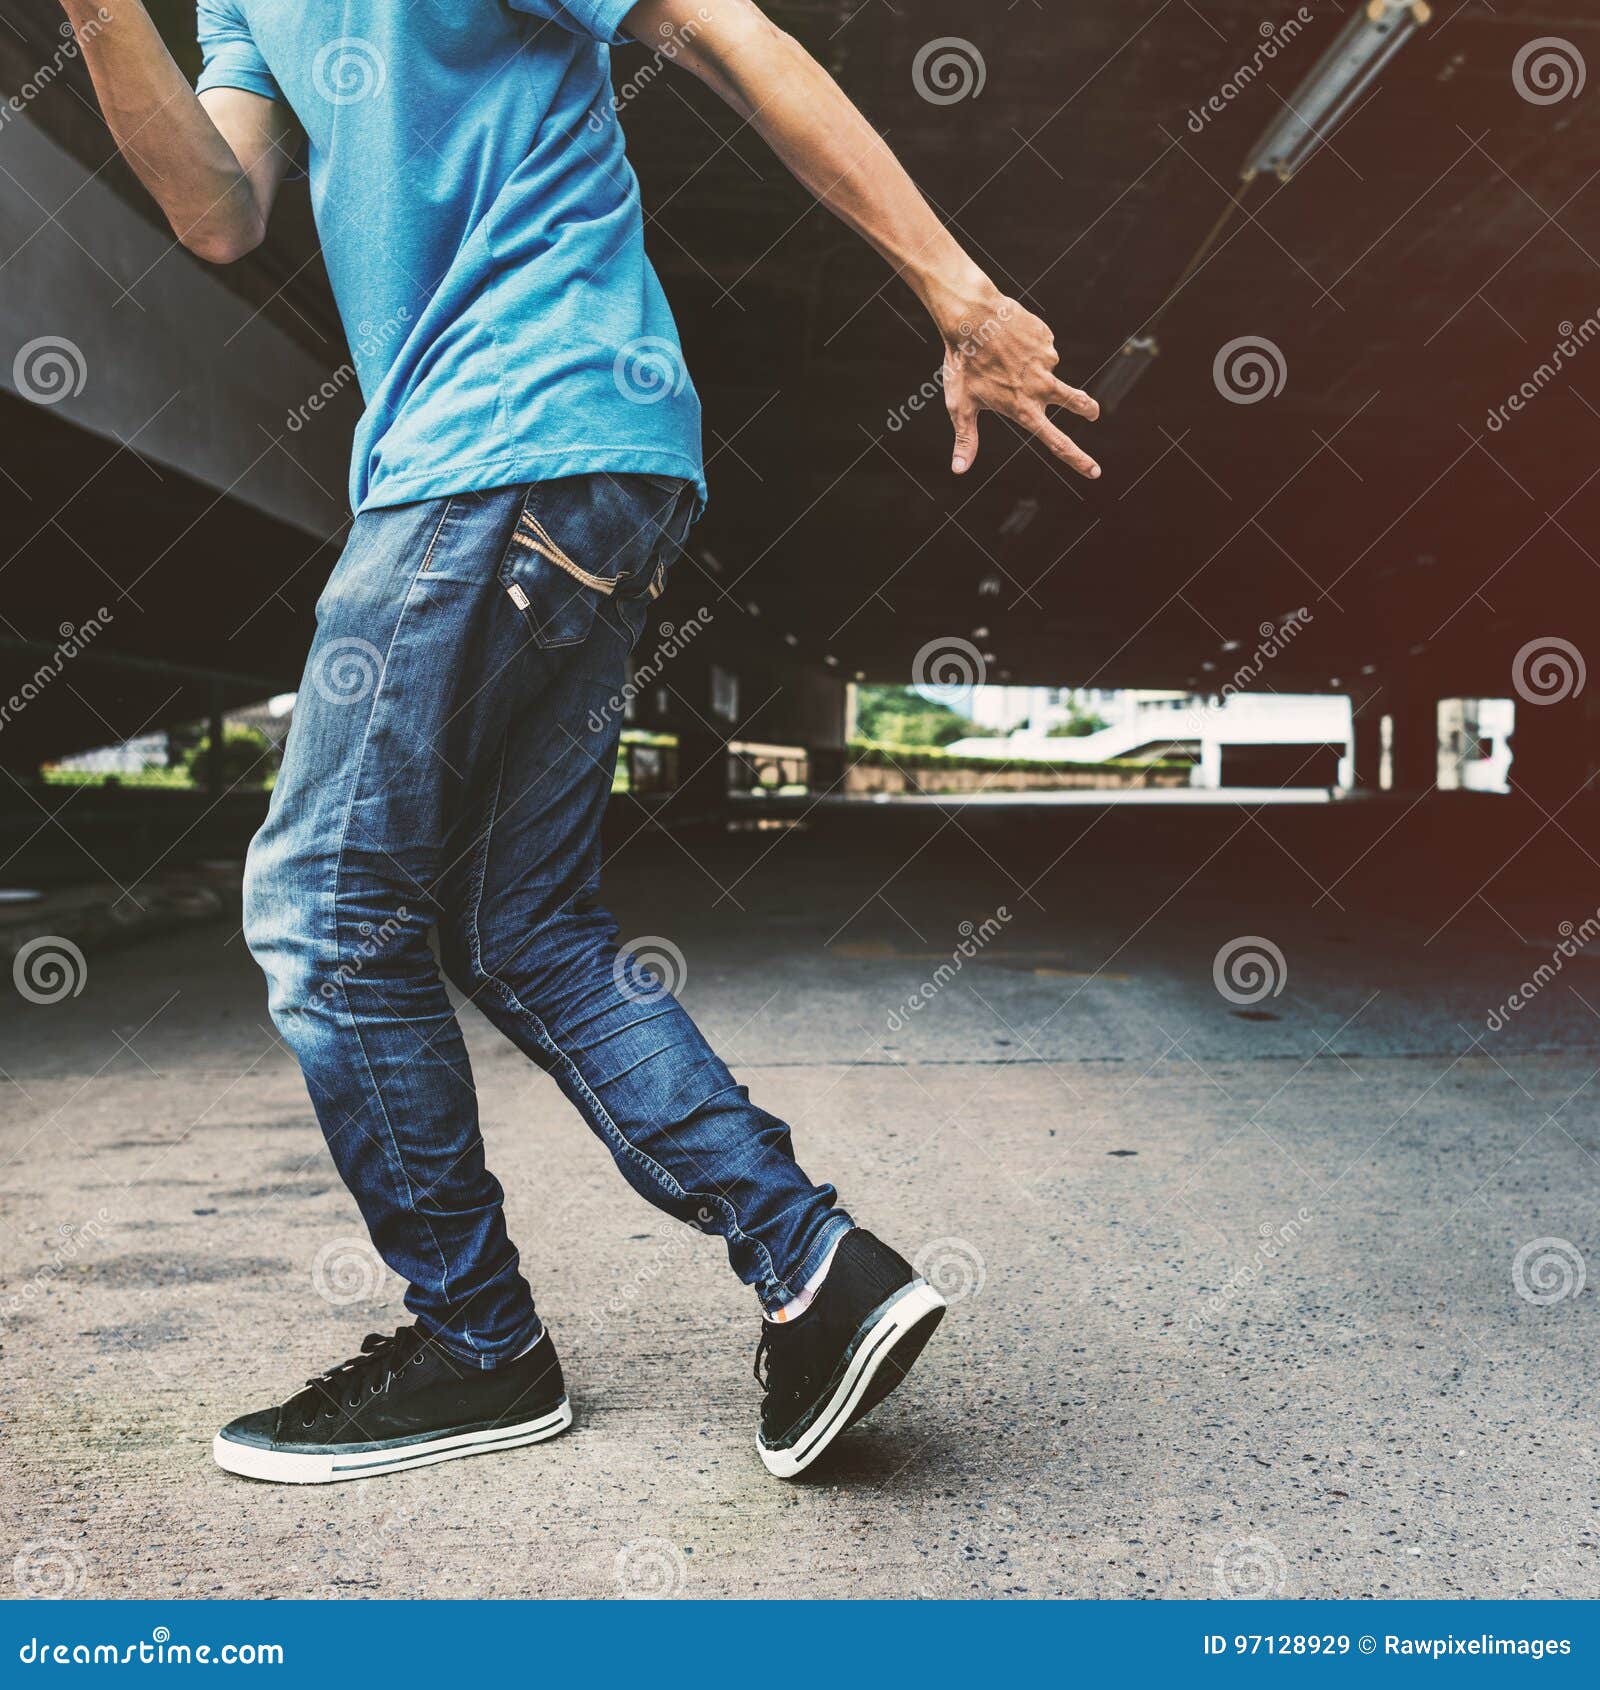 breakdance hiphop dance skill street dance concept